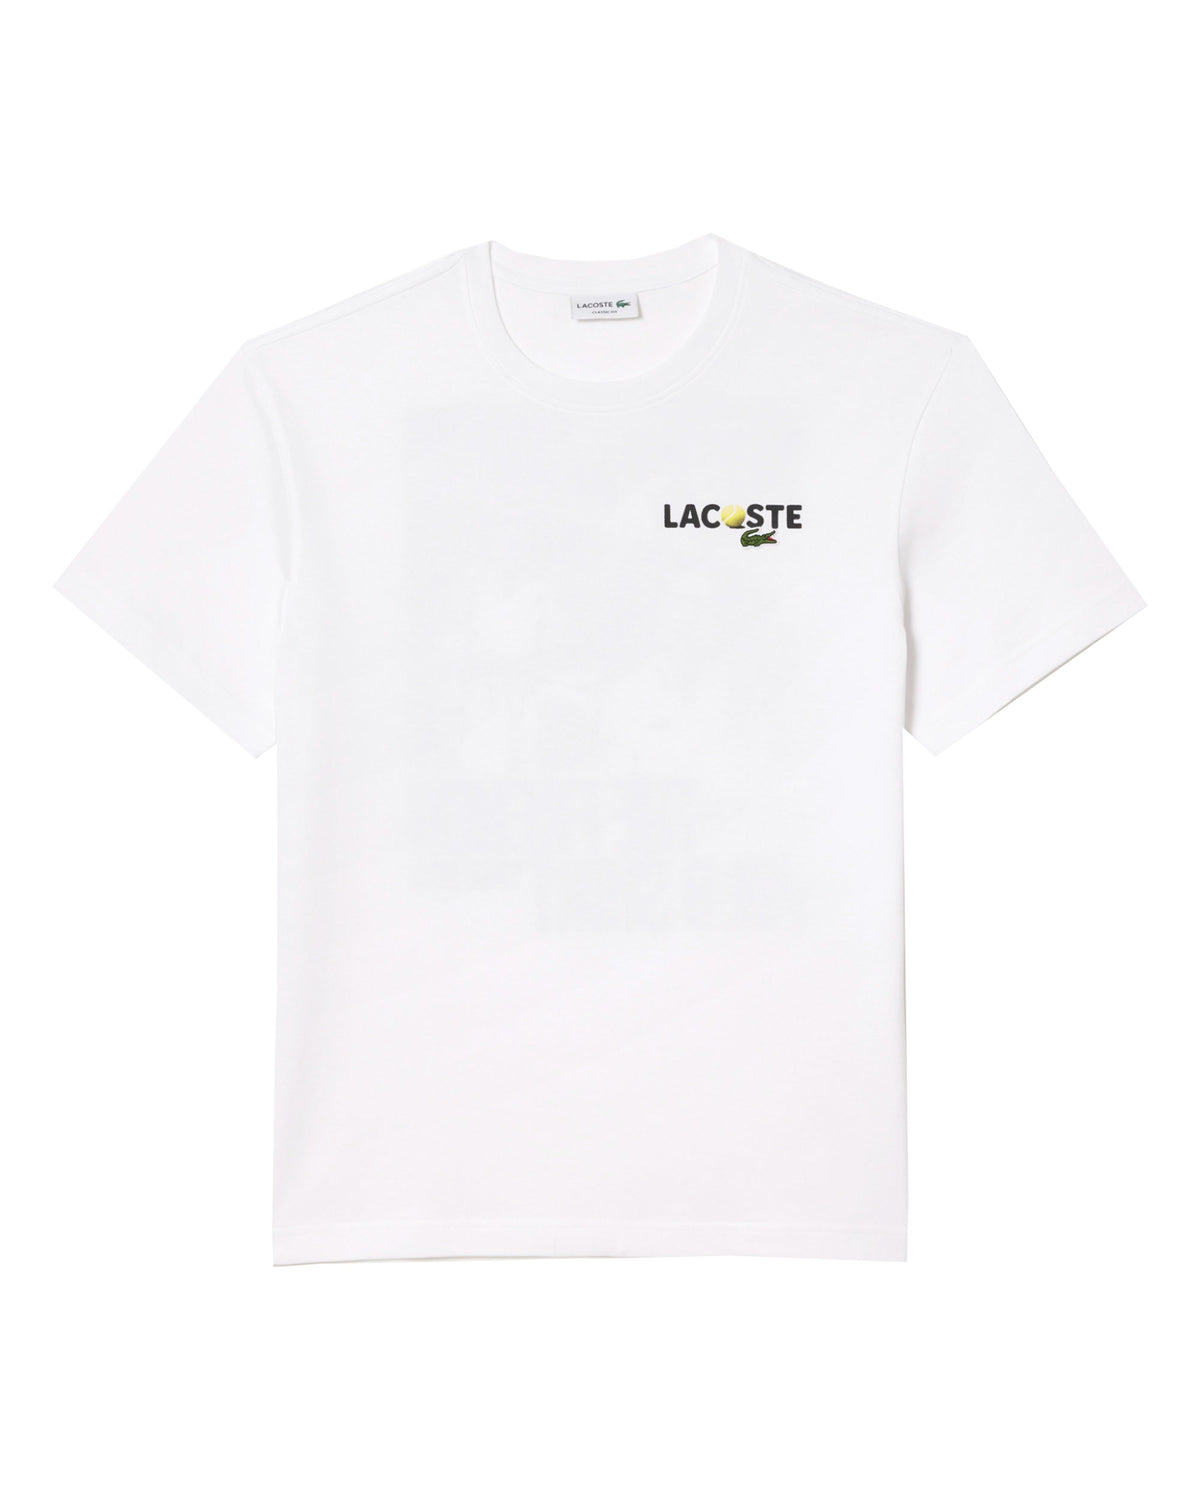 T-Shirt Uomo Lacoste Tennis Print Bianco